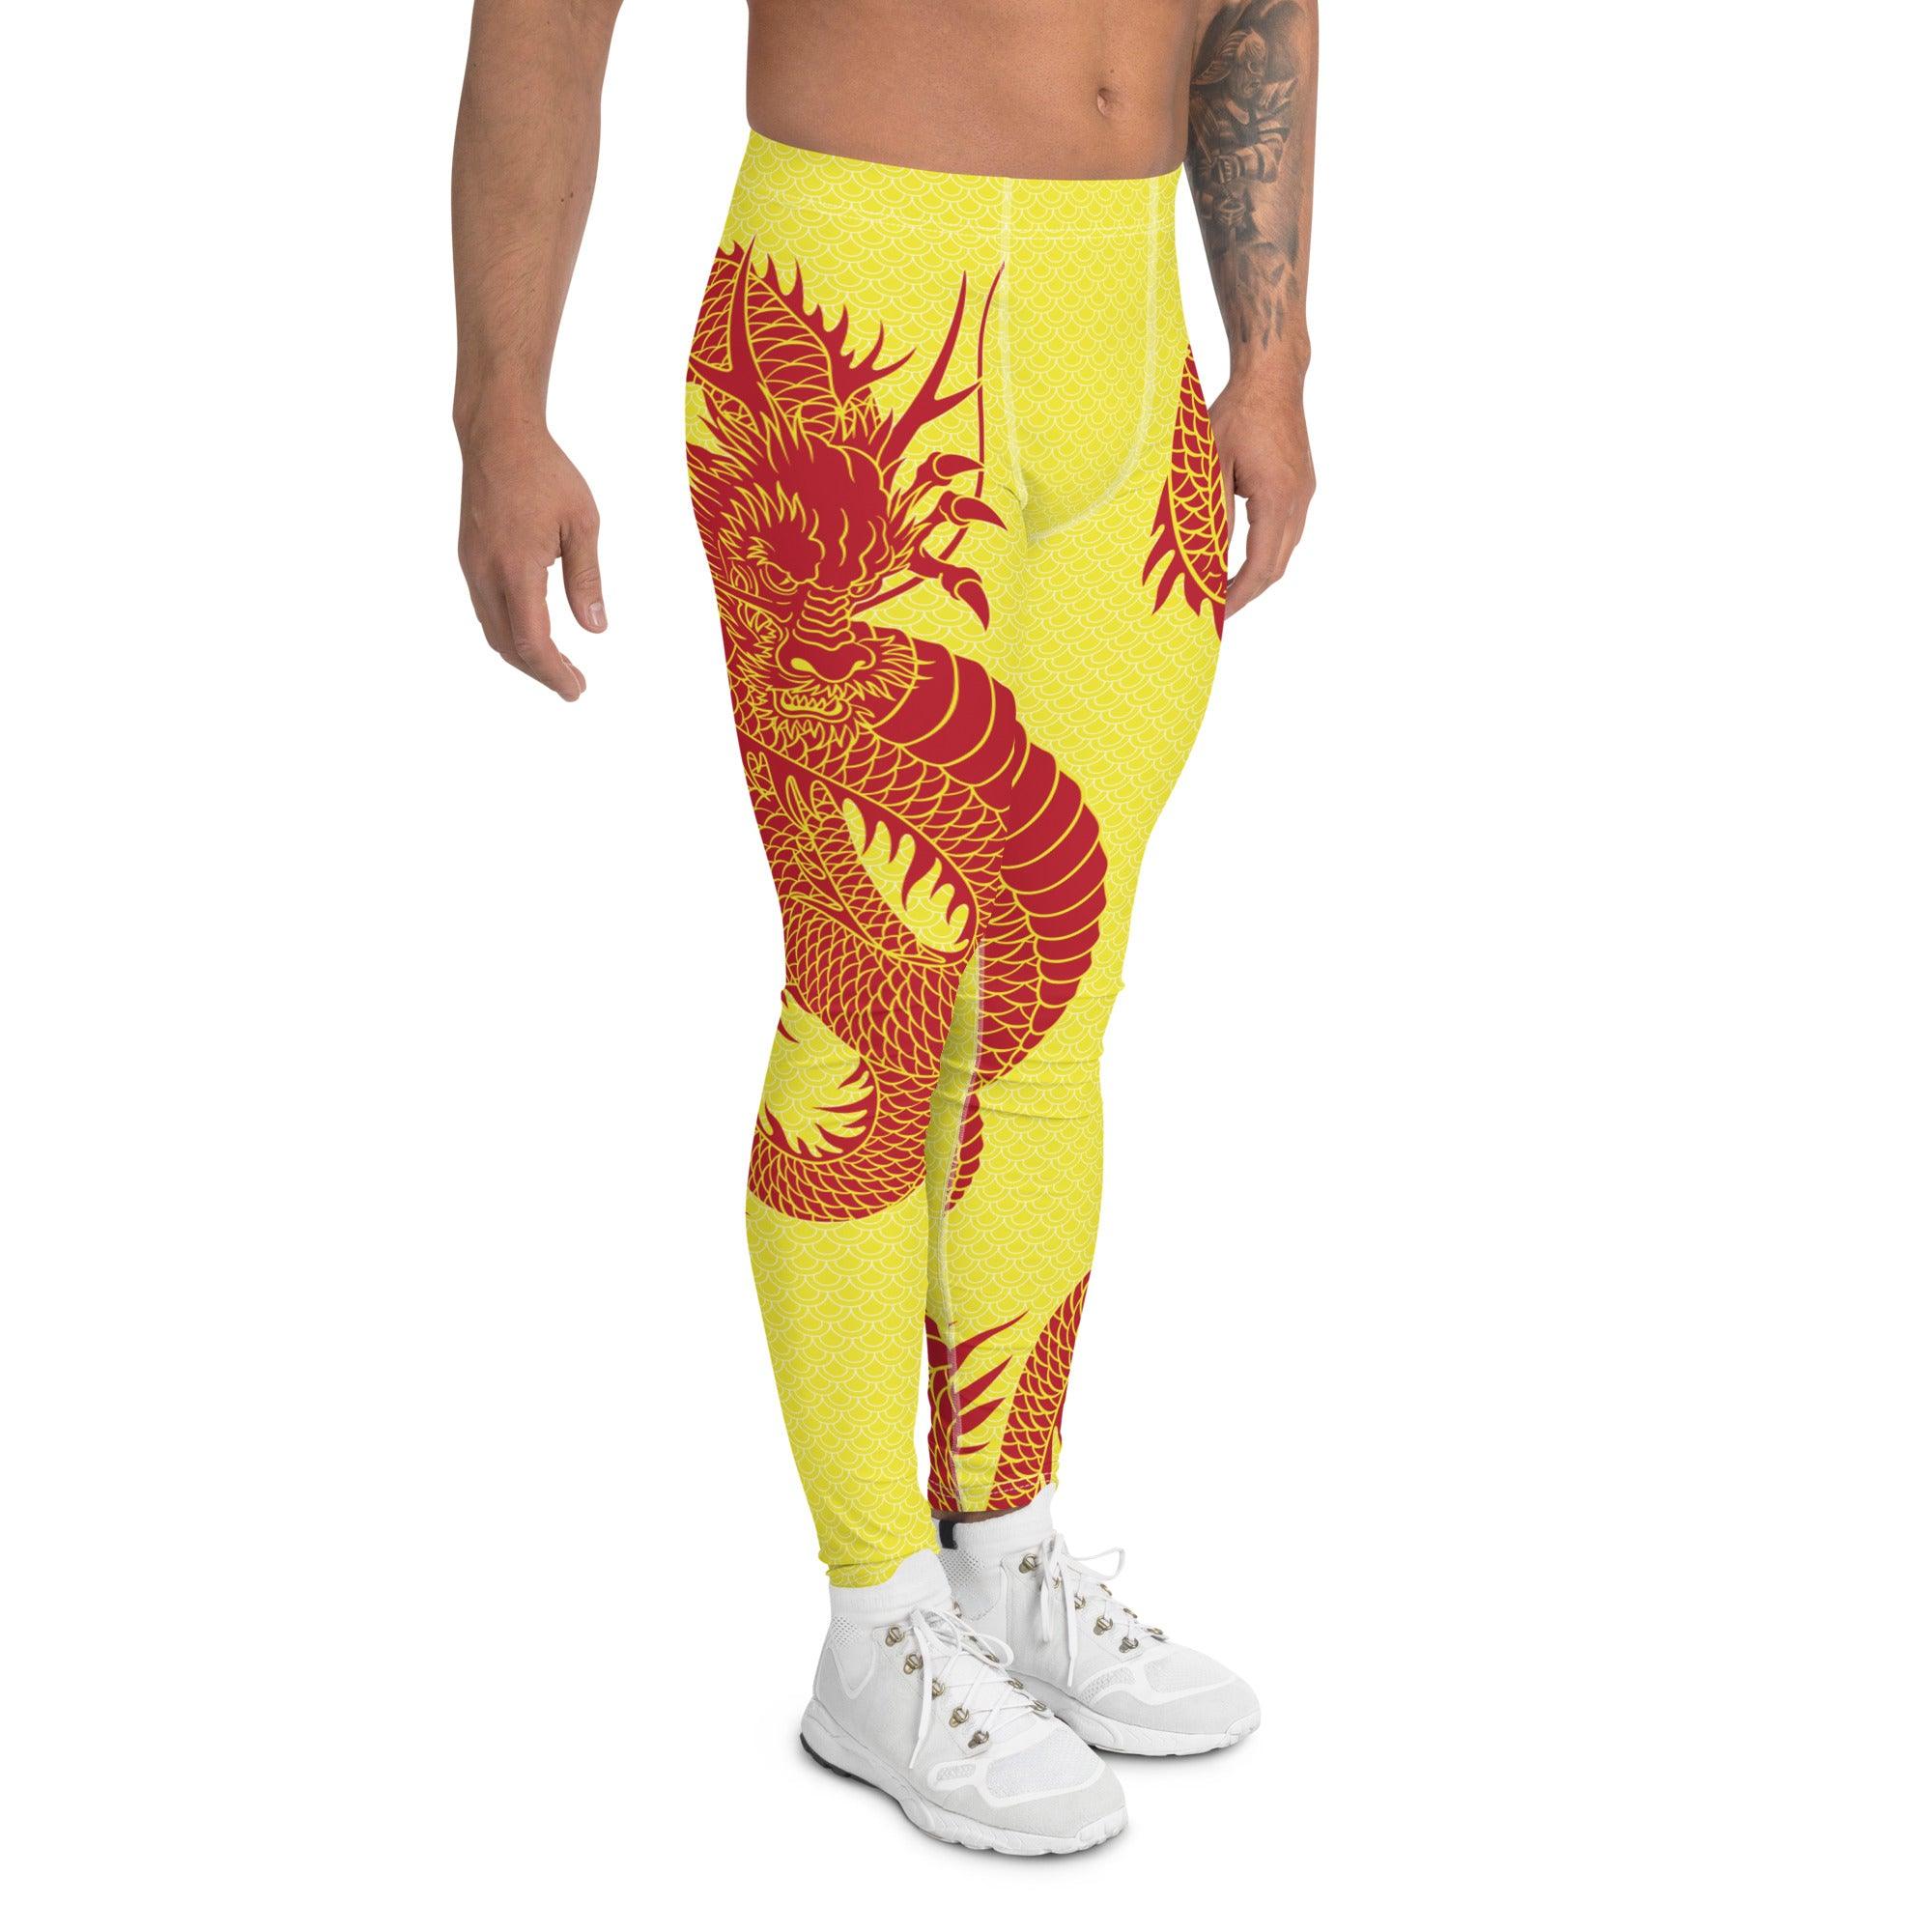 Red Dragon Yellow Leggings for Men - VirtuousWares:Global